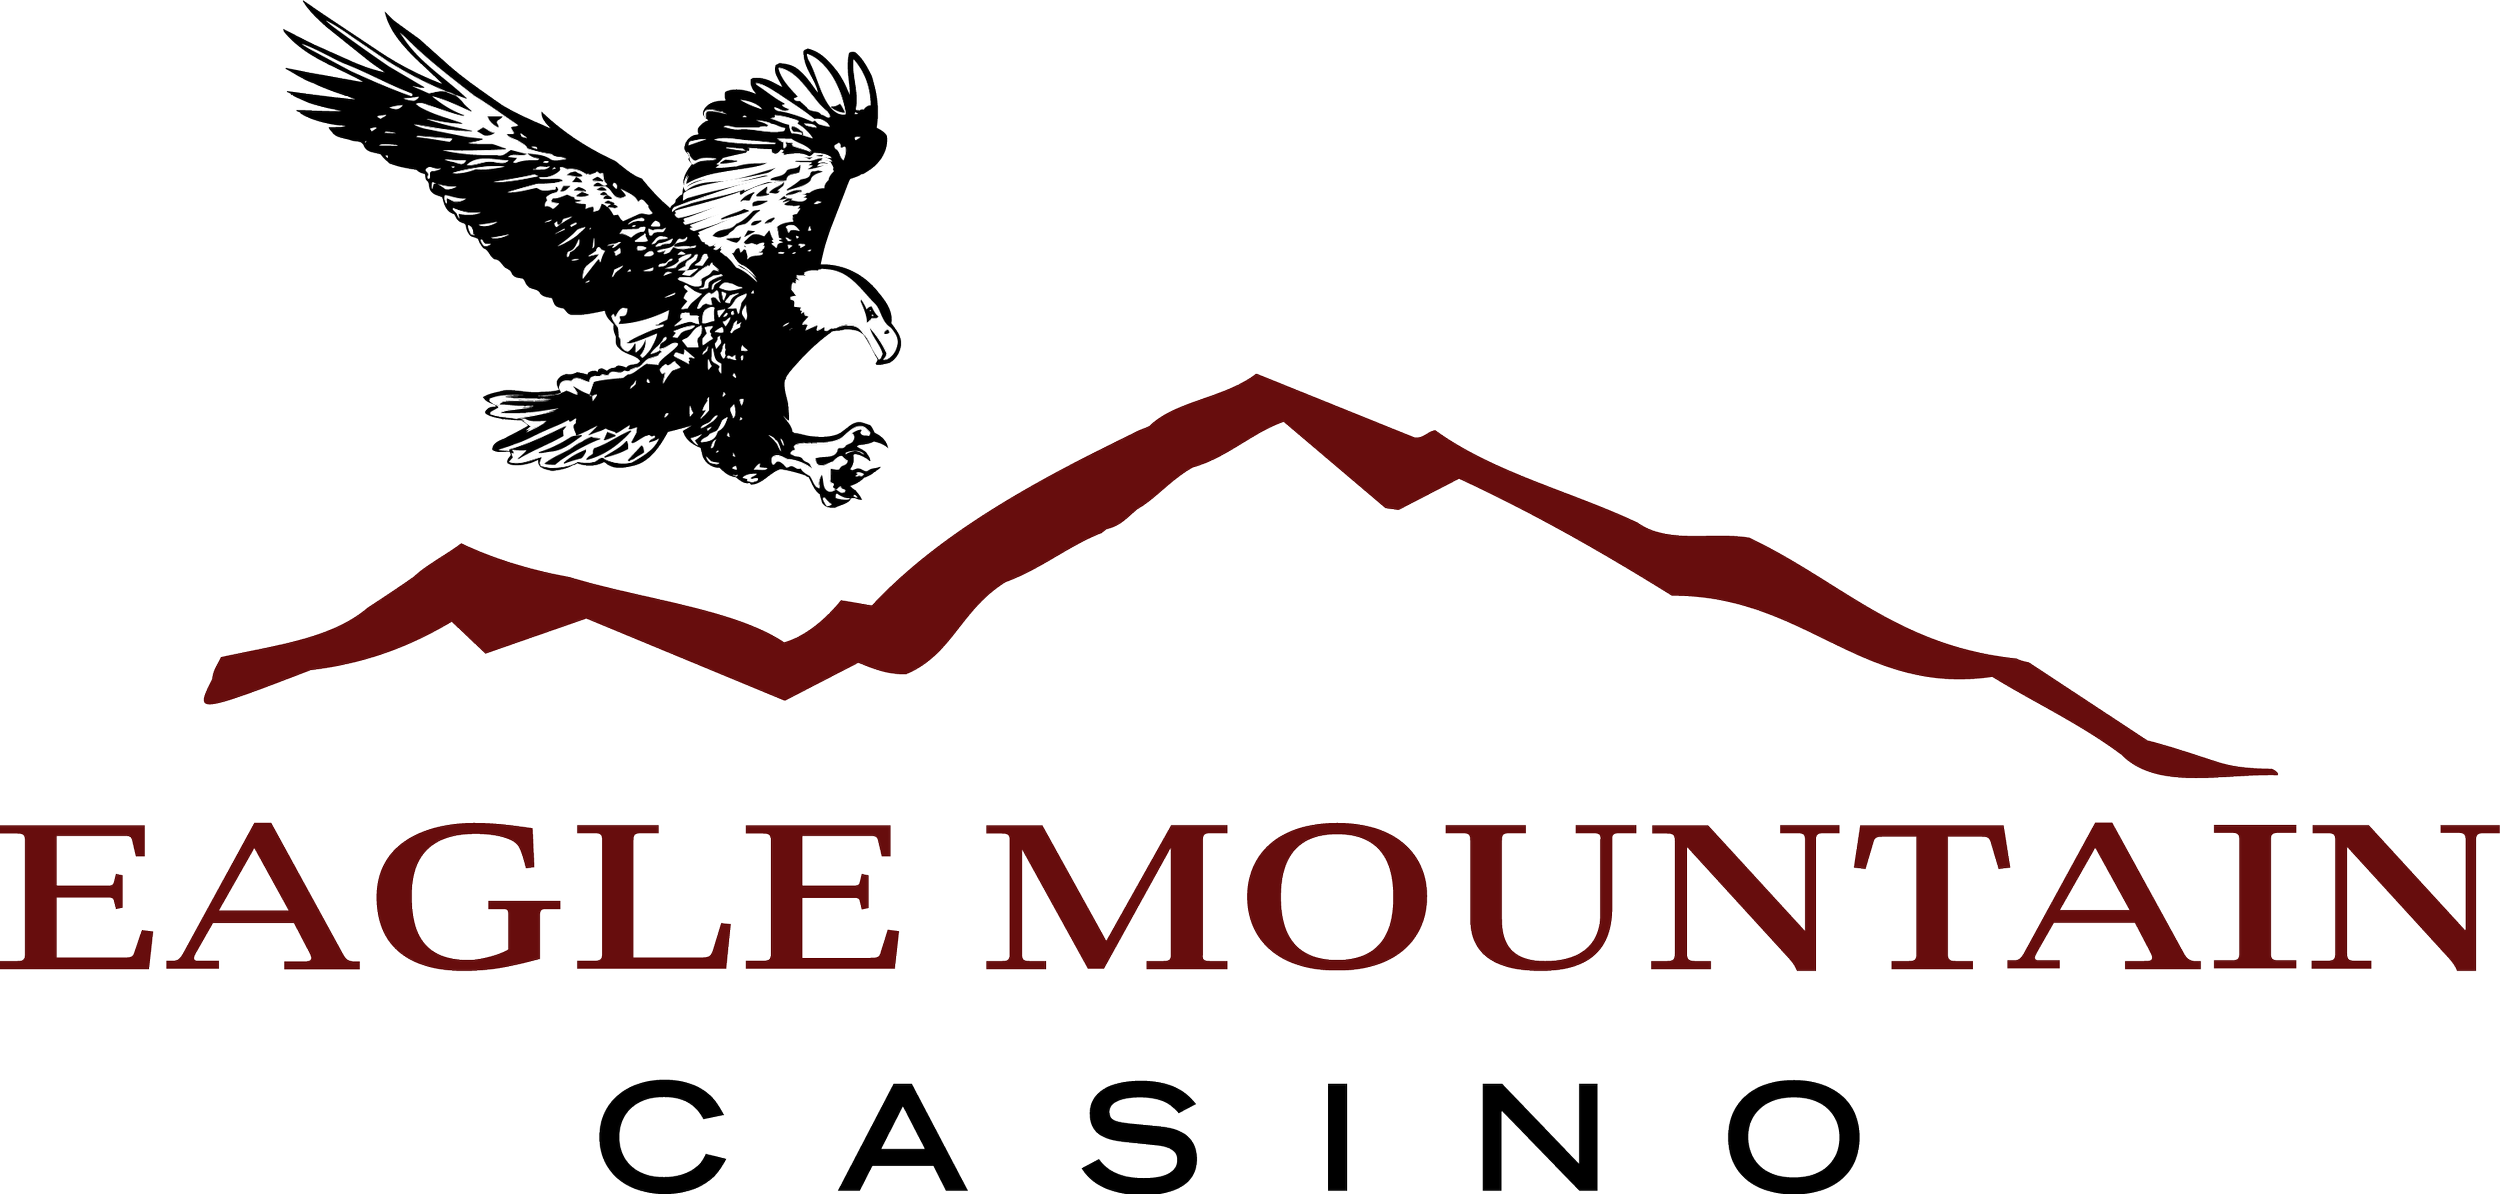 Eagle Mountain.png